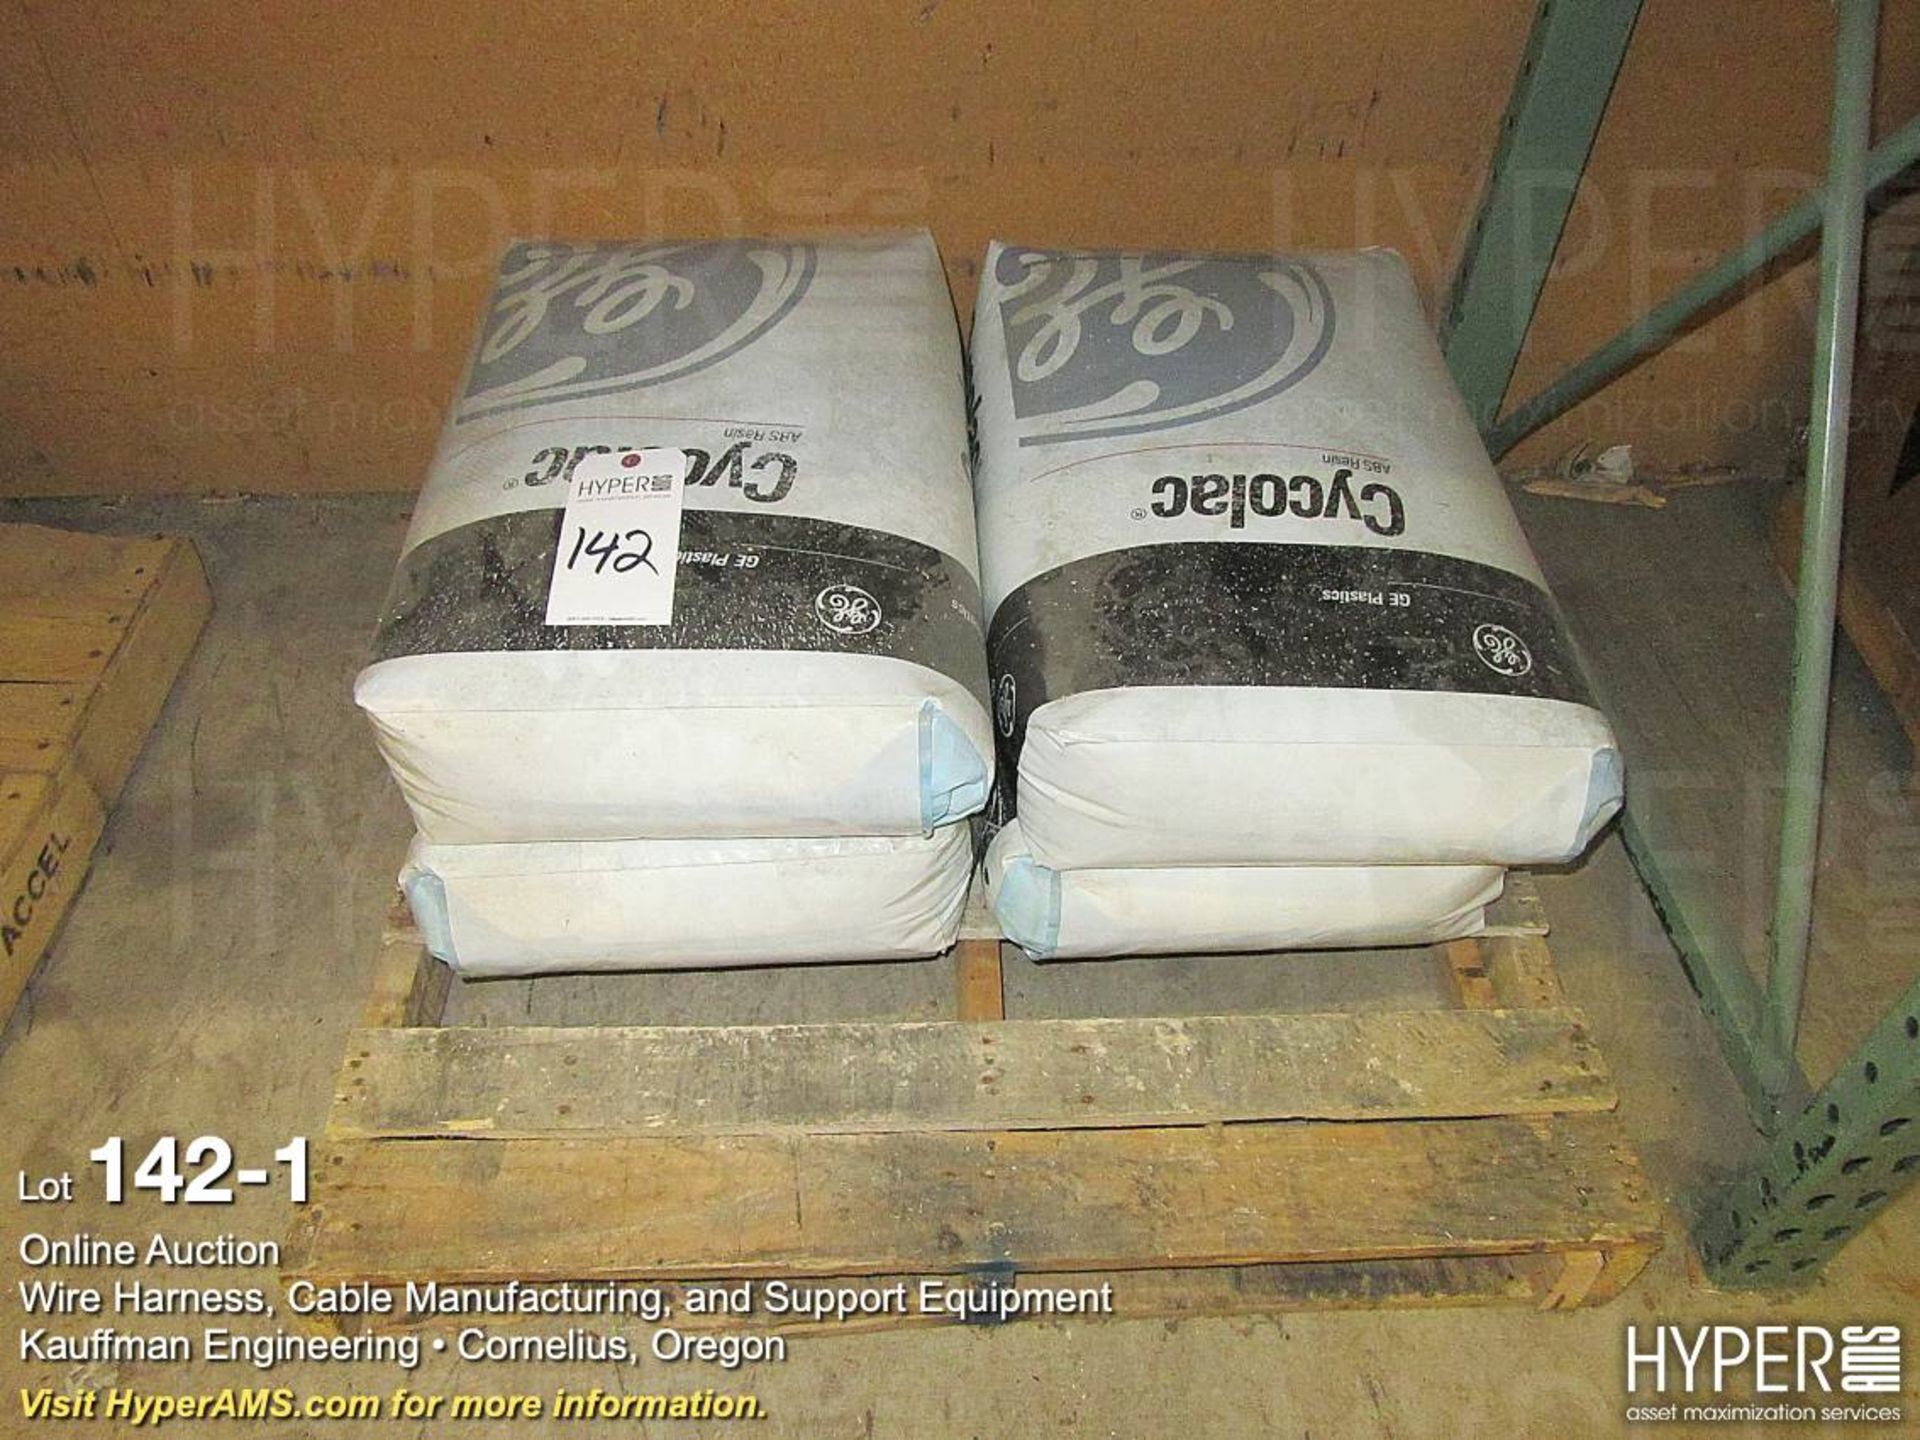 Bags of GE Plastics Cycolac ABS Resin